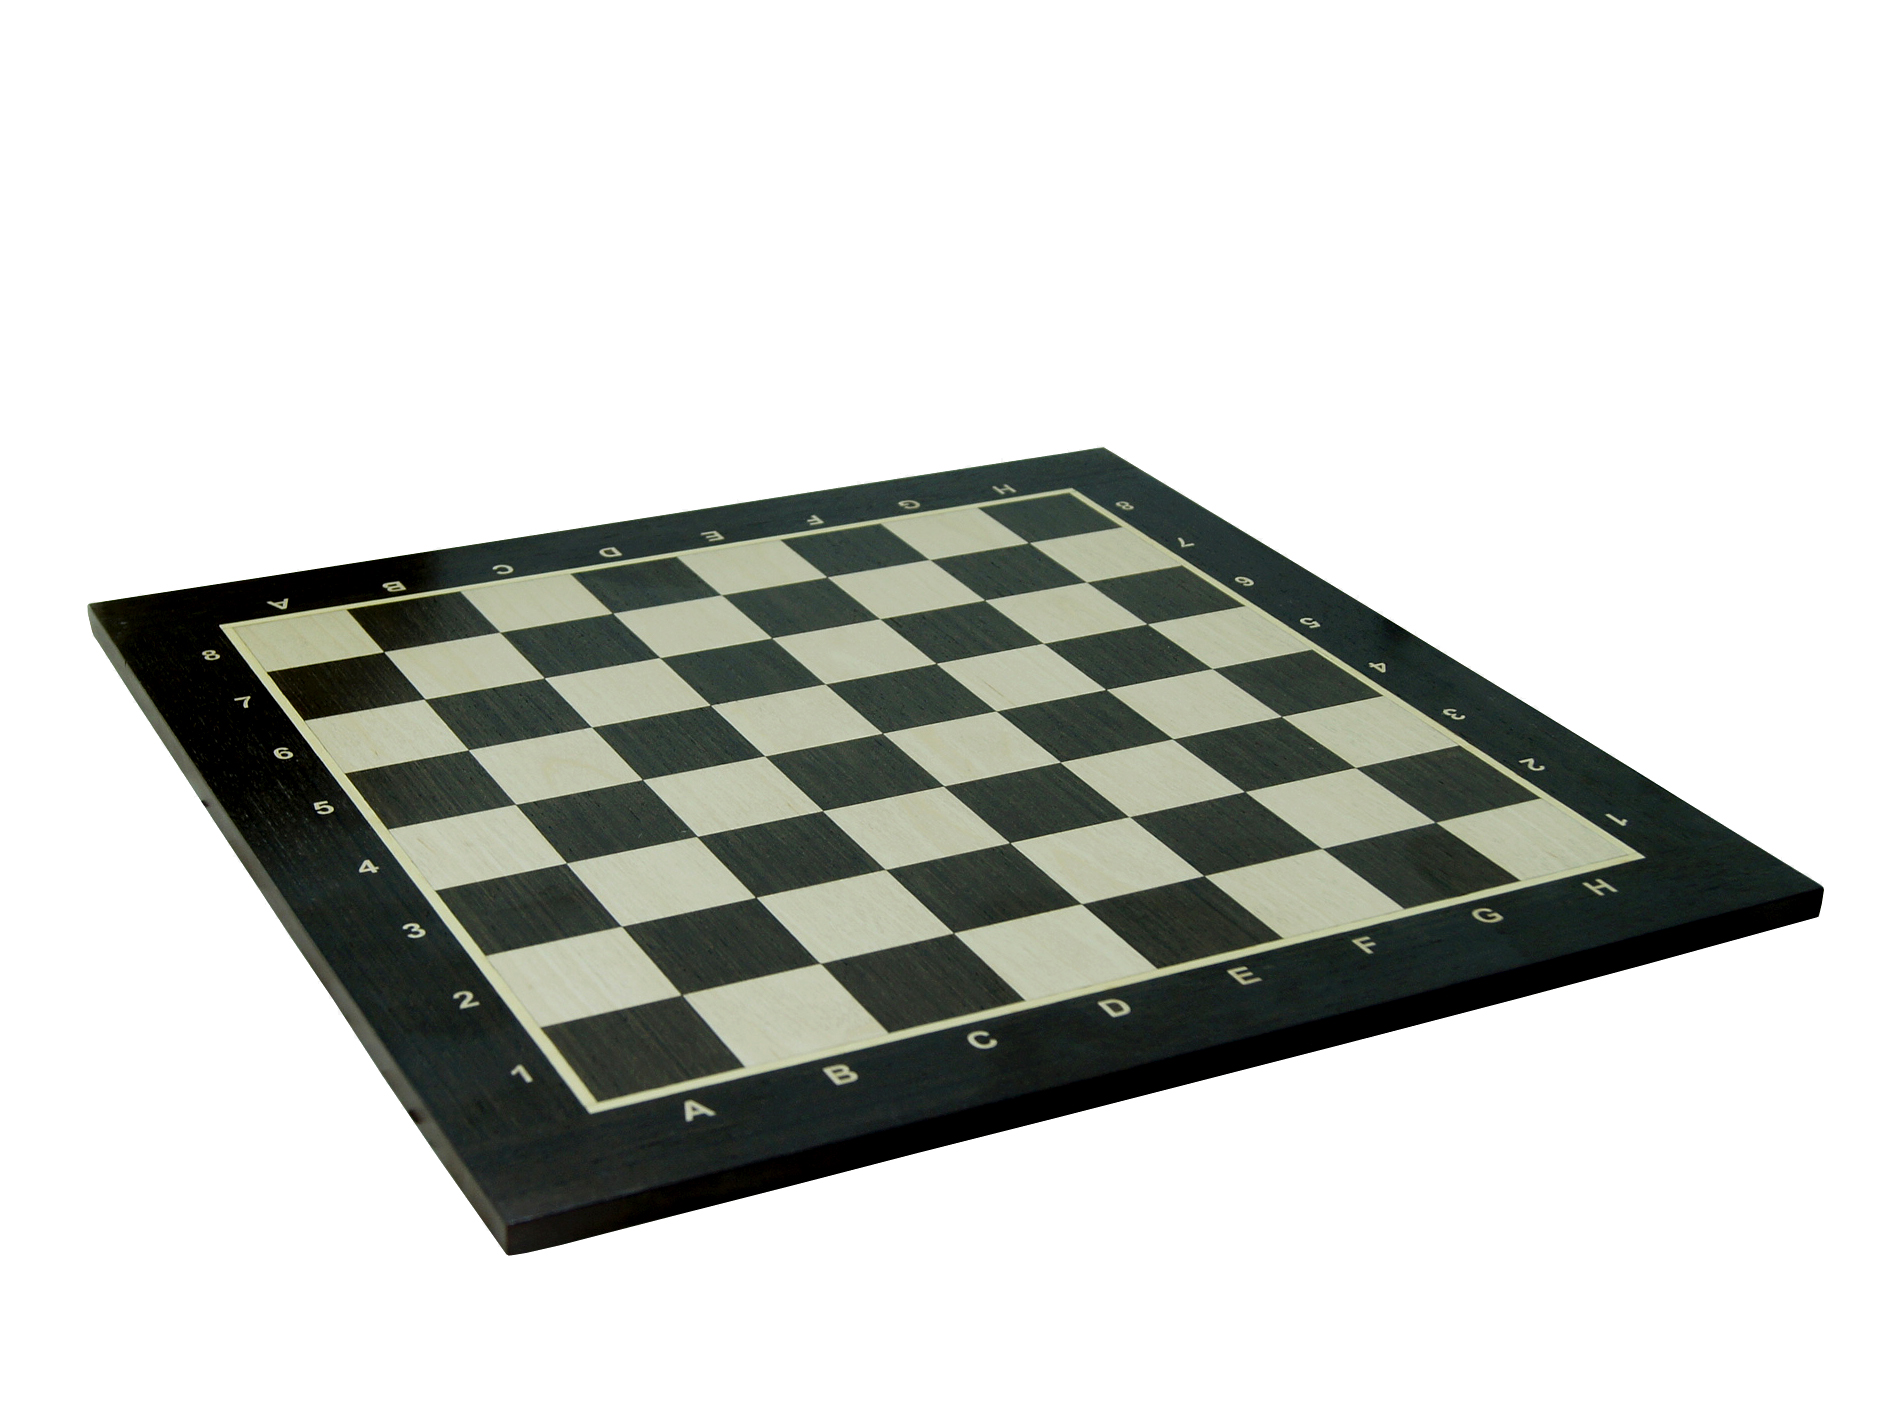 Варианты шахматной доски. Шахматная доска нескладная 50 мм. Шахматная нескладная доска 50ммх50мм. Доска шахматная нескладная 50 см. Доска для шахмат и шашек.